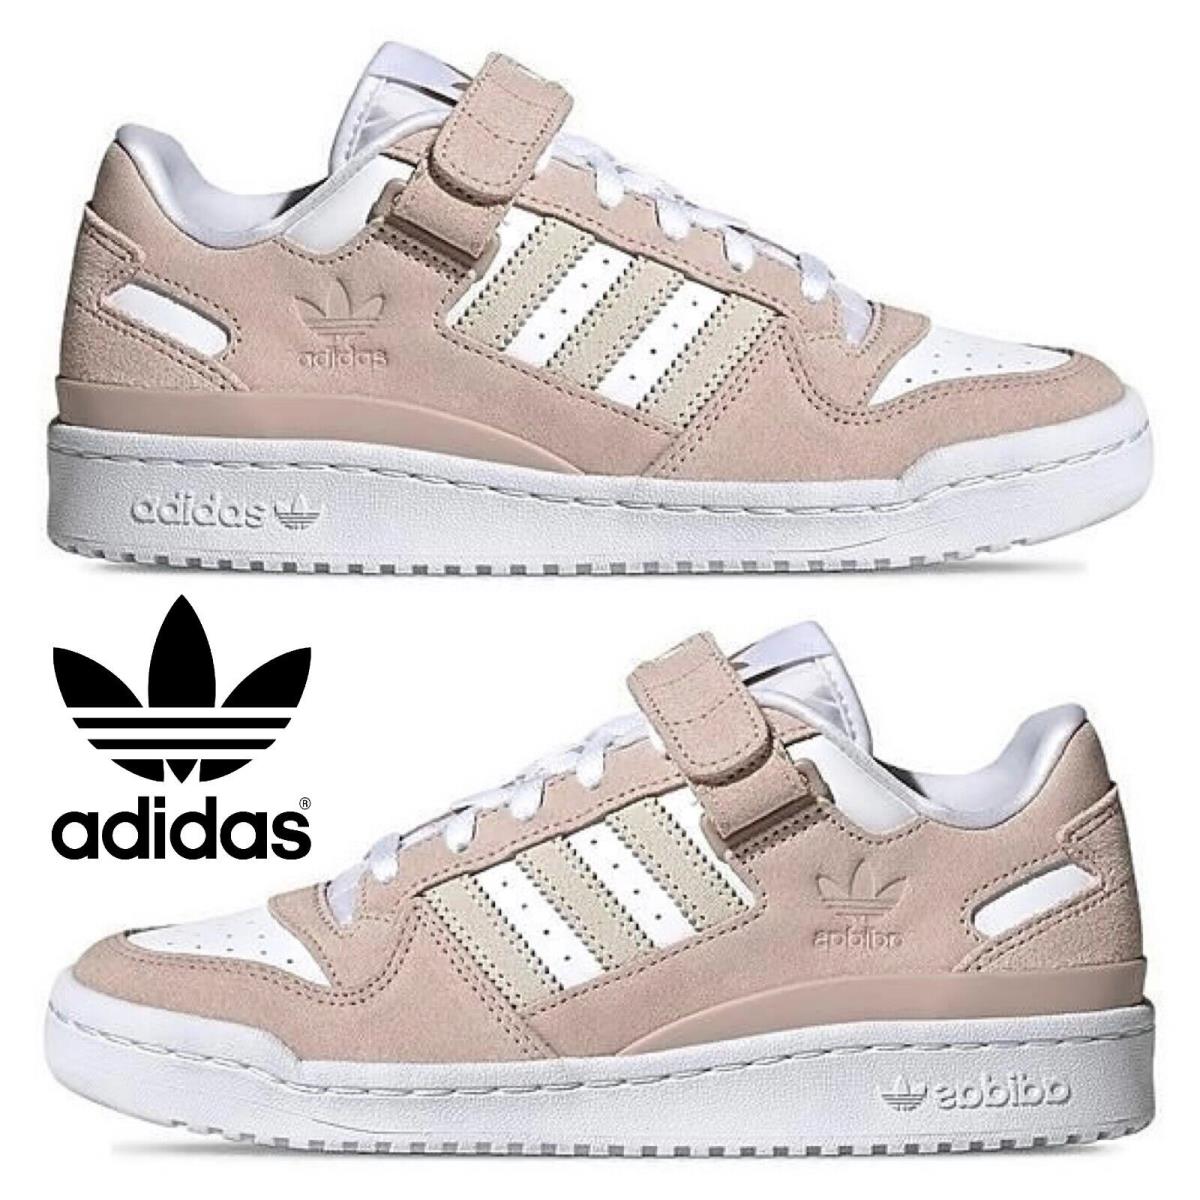 Adidas Originals Forum Low Women`s Sneakers Comfort Casual Shoes Taupe Cream